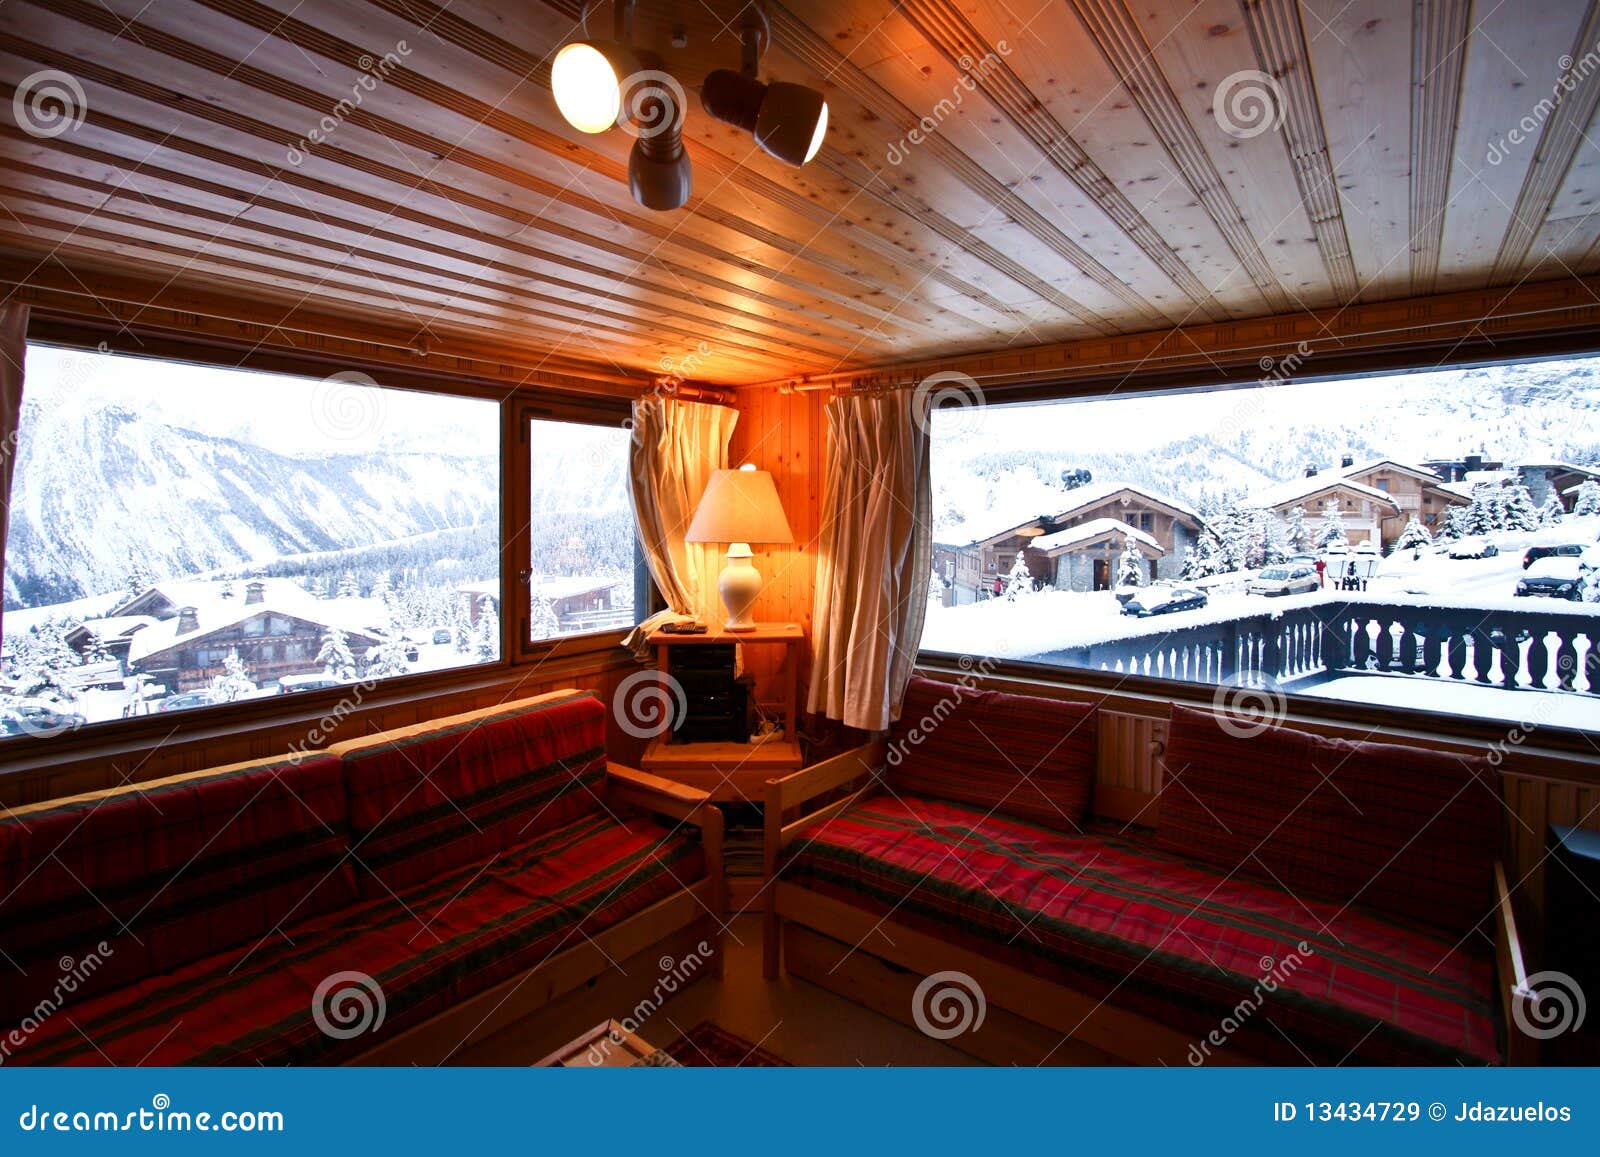 living room in swiss alpine chalet